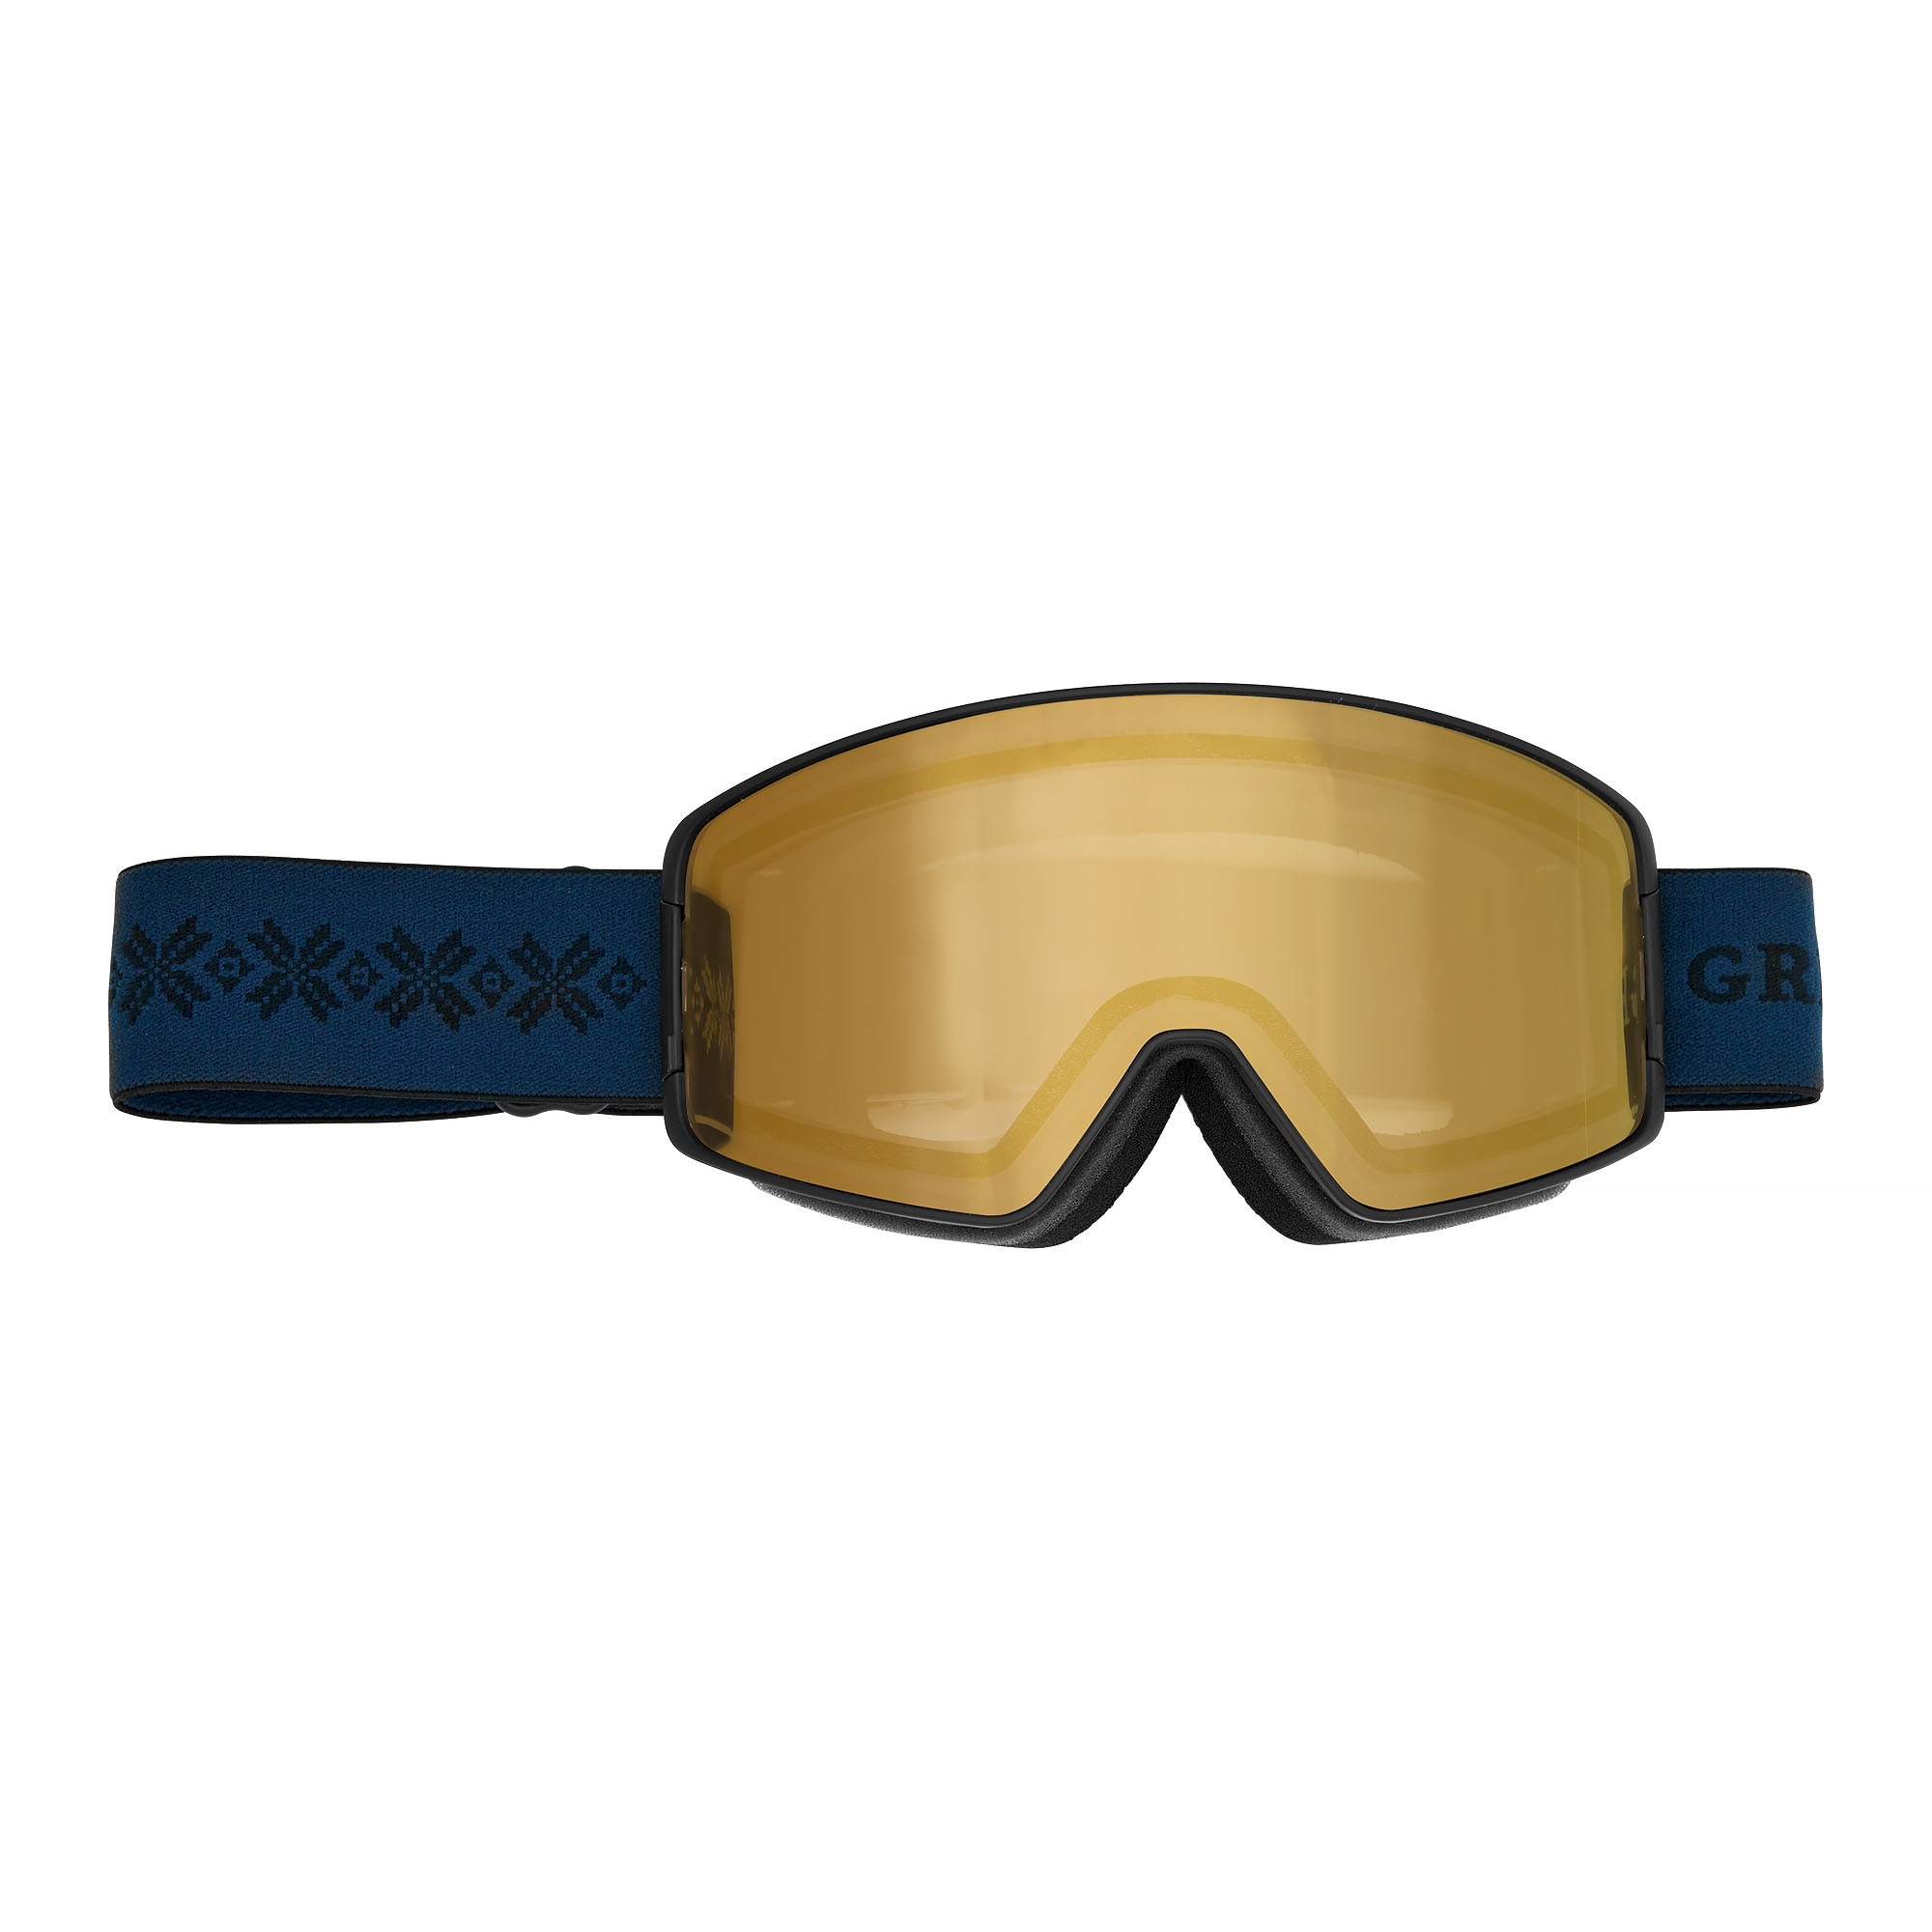 Gridarmor Hafjell Ski Goggles Navy blazer